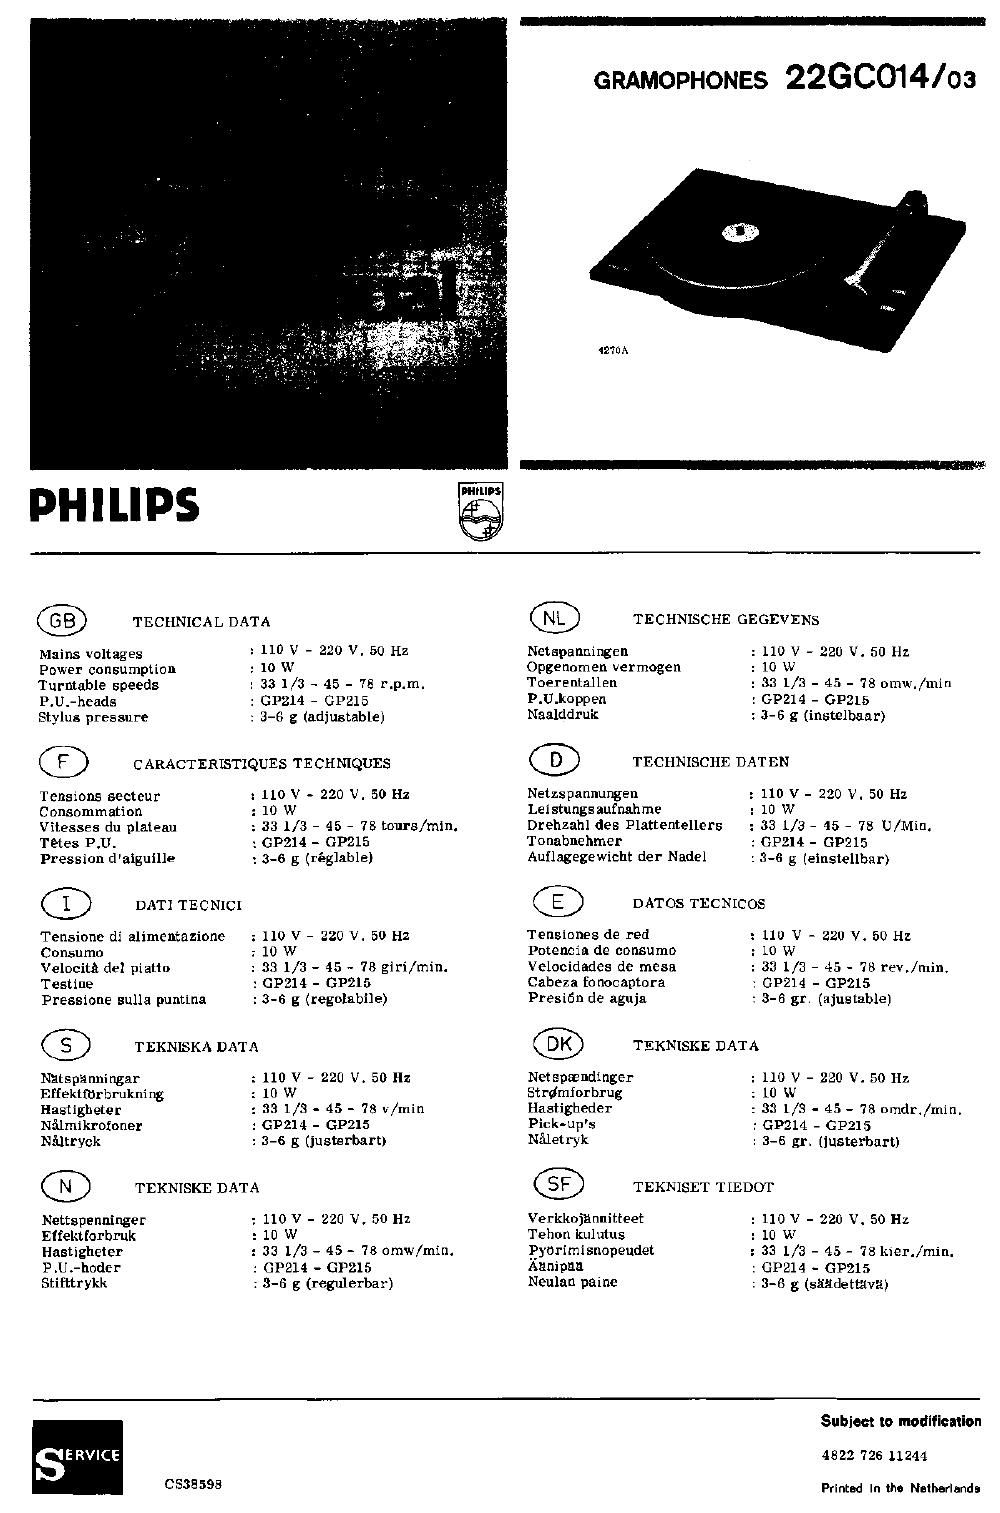 philips 22 gc 014 service manual